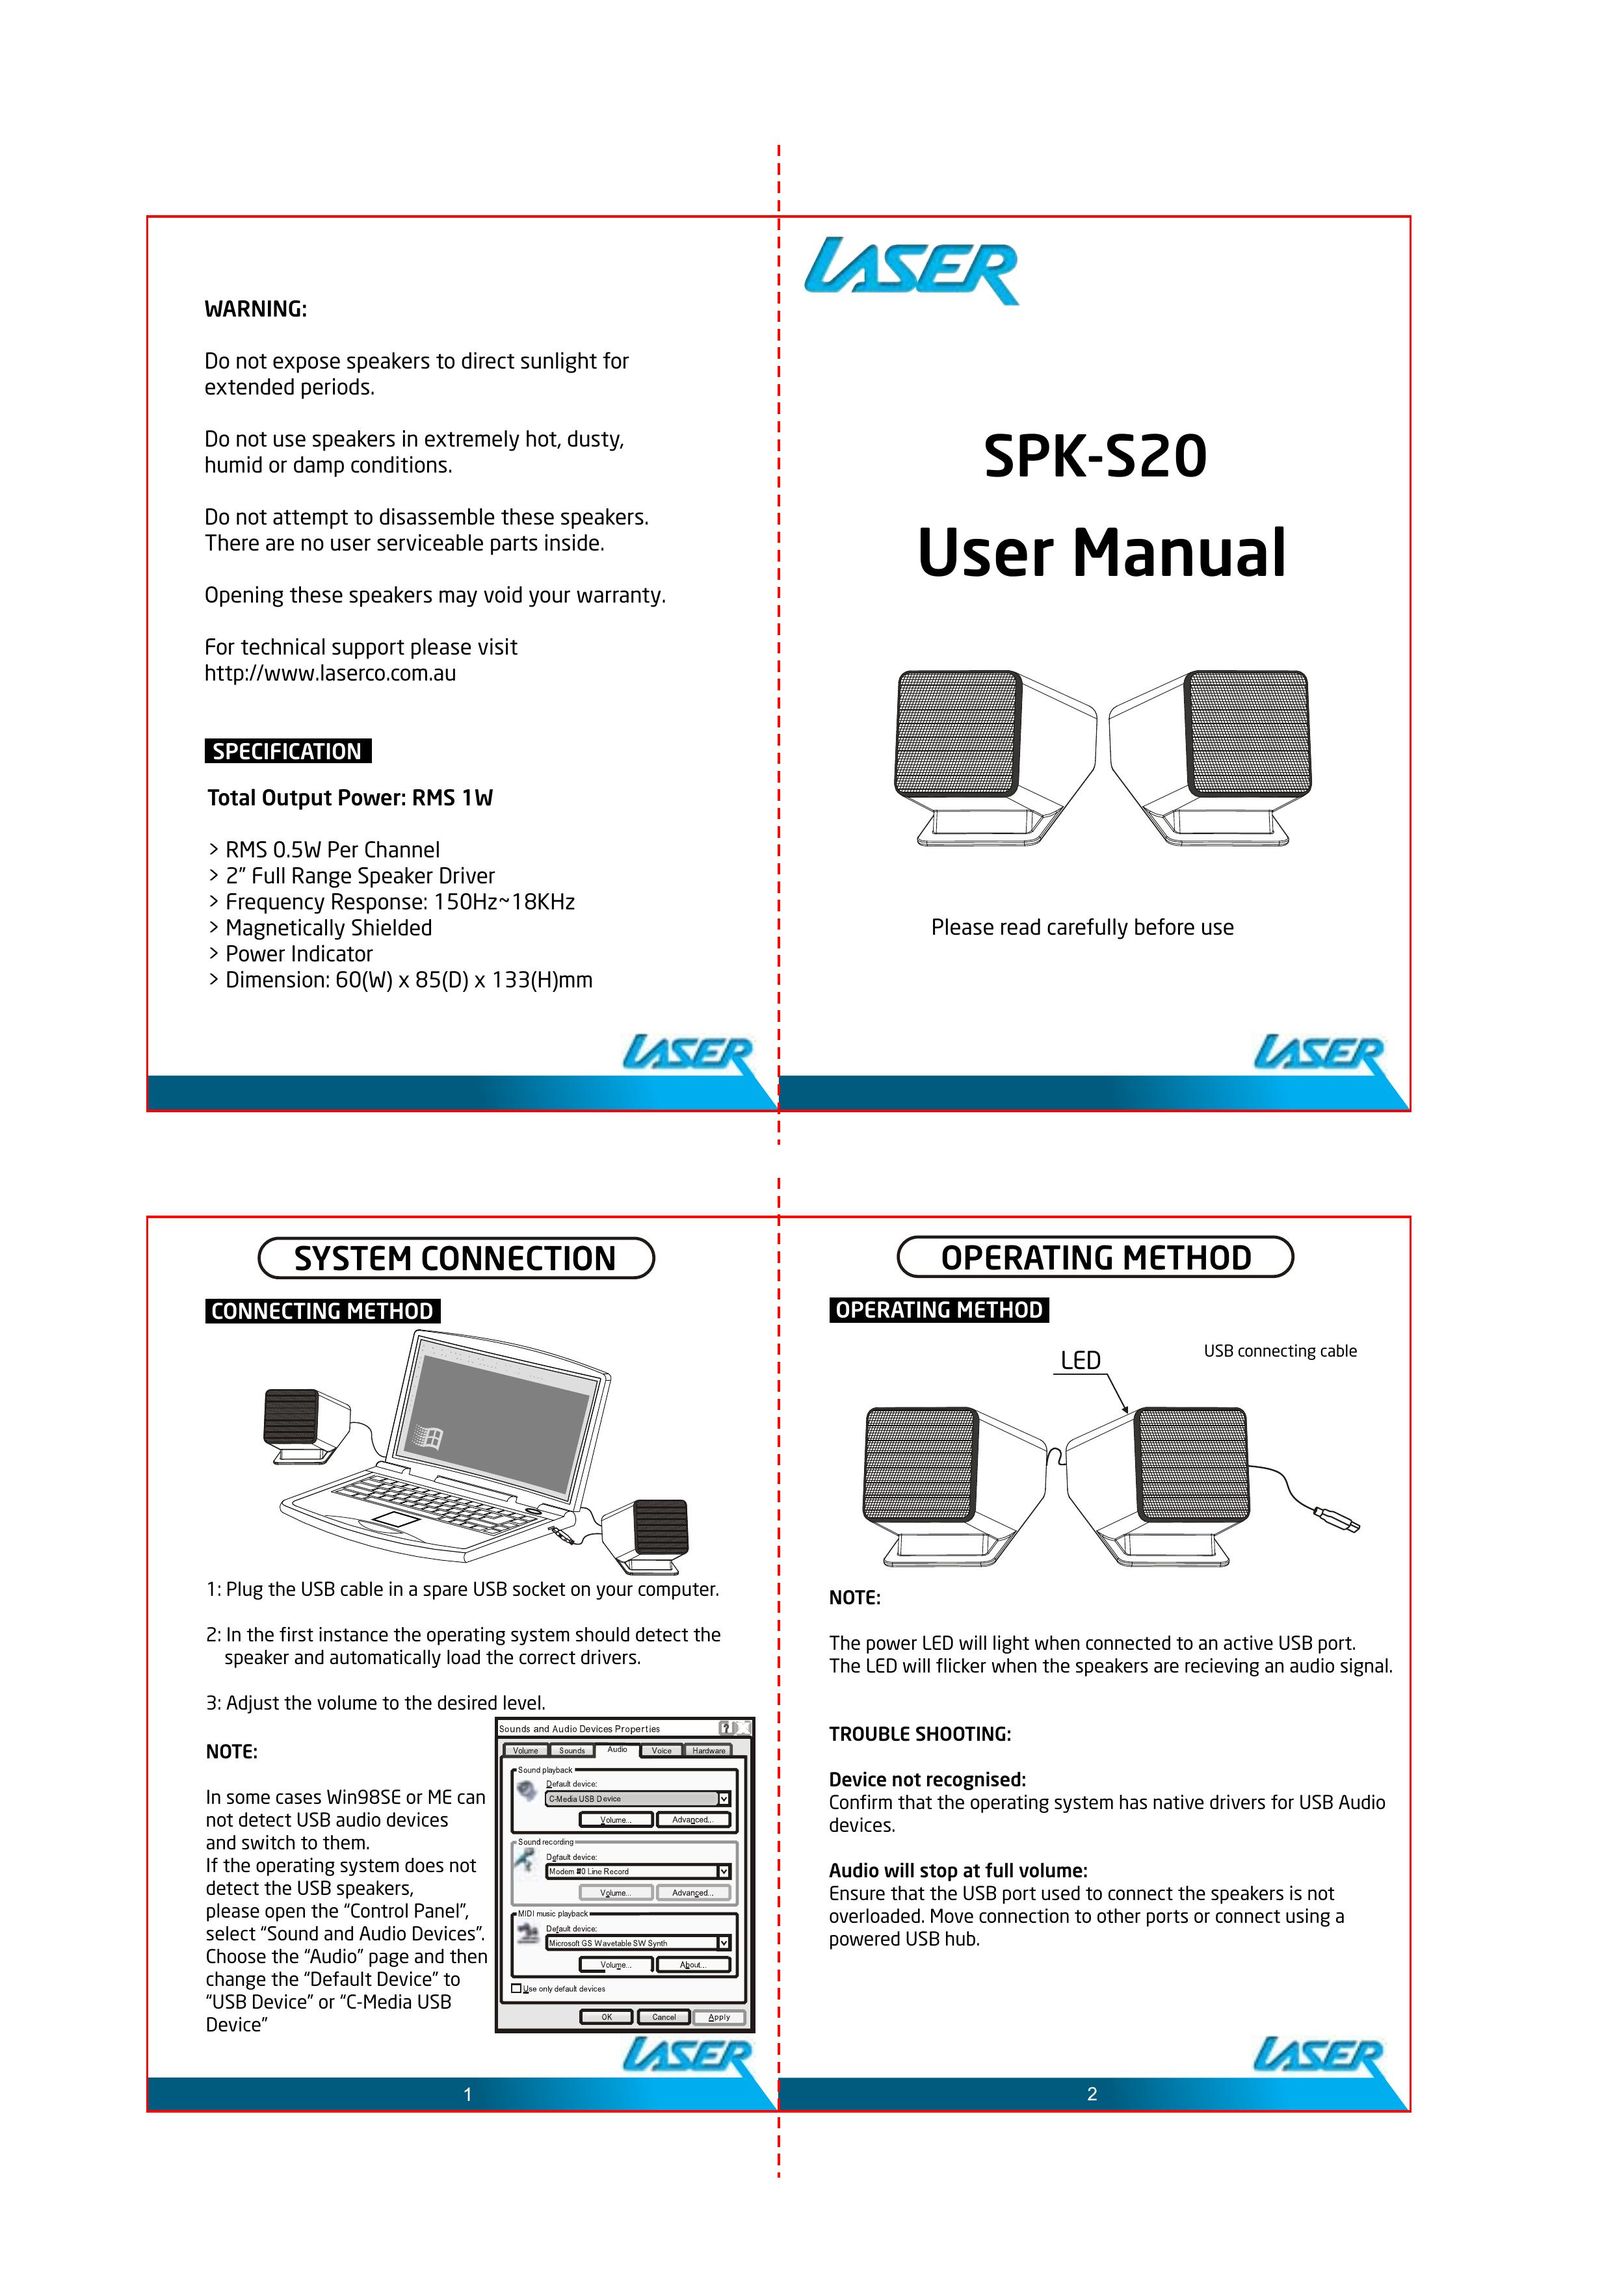 Laser SPK-S20 Computer Accessories User Manual